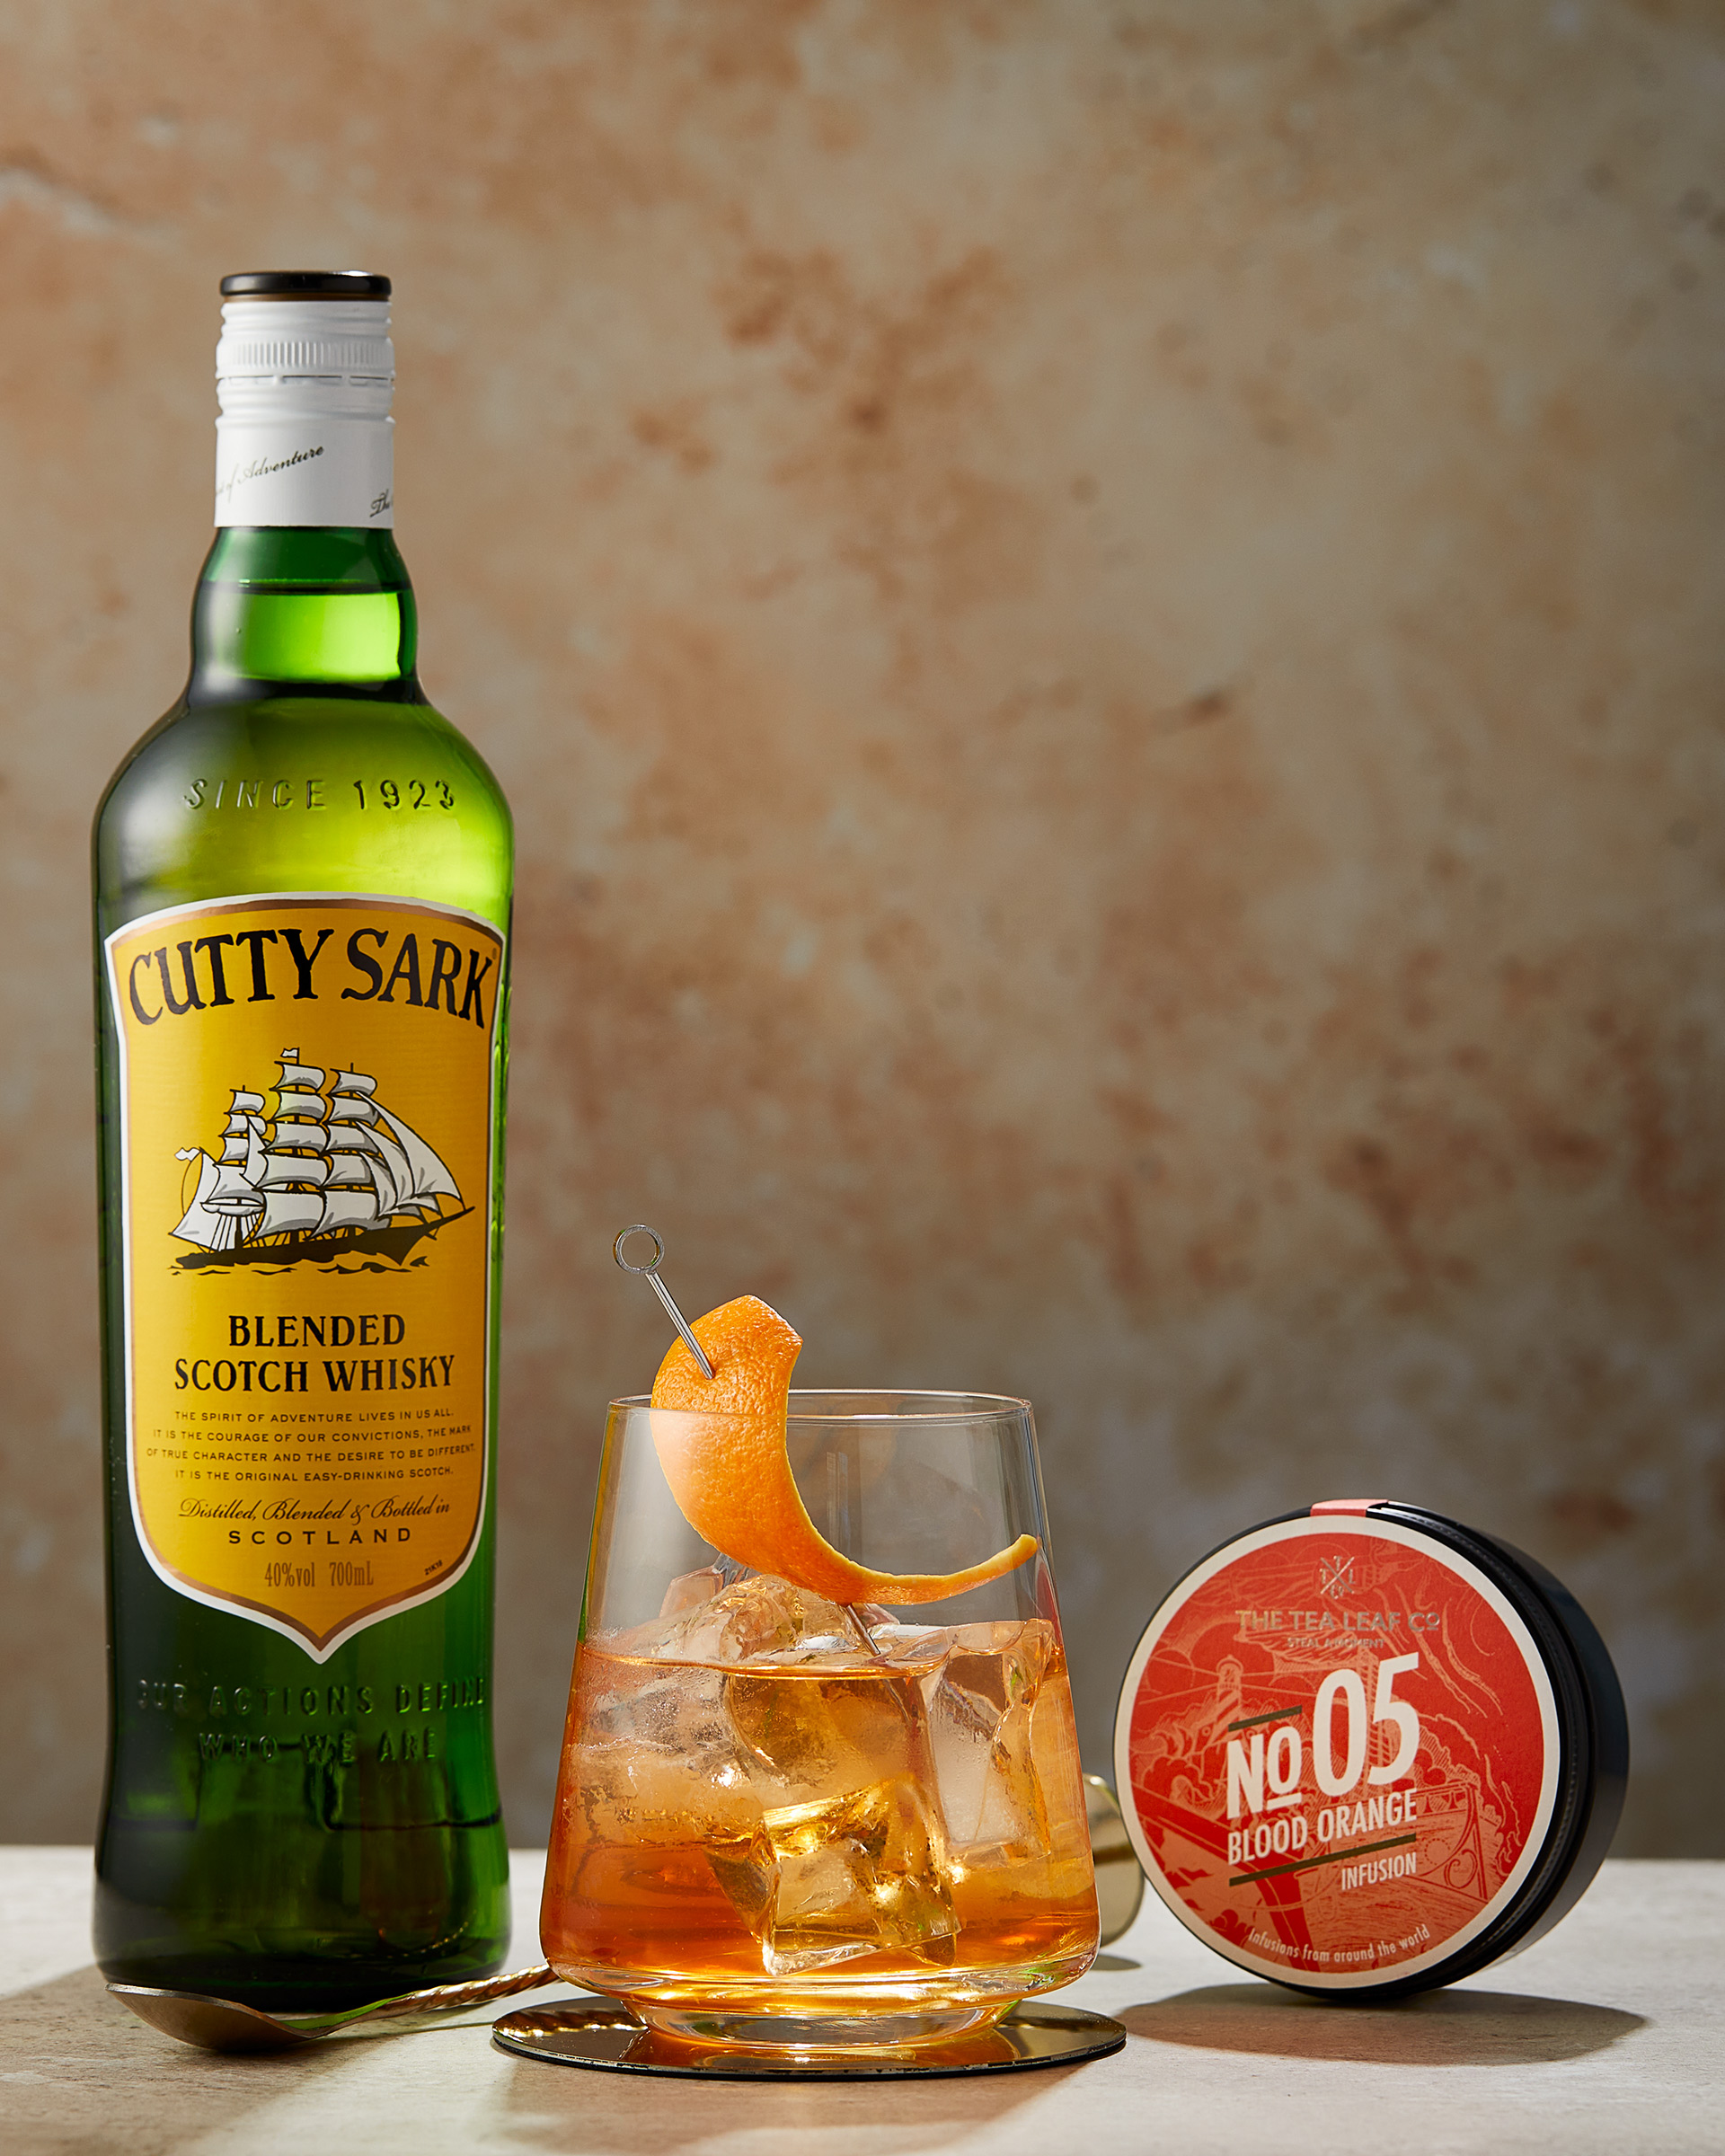 Cutty Sark Old Fashioned, The Tea Leaf Company, Glasgow drinks photographer Alastair Ferrier.